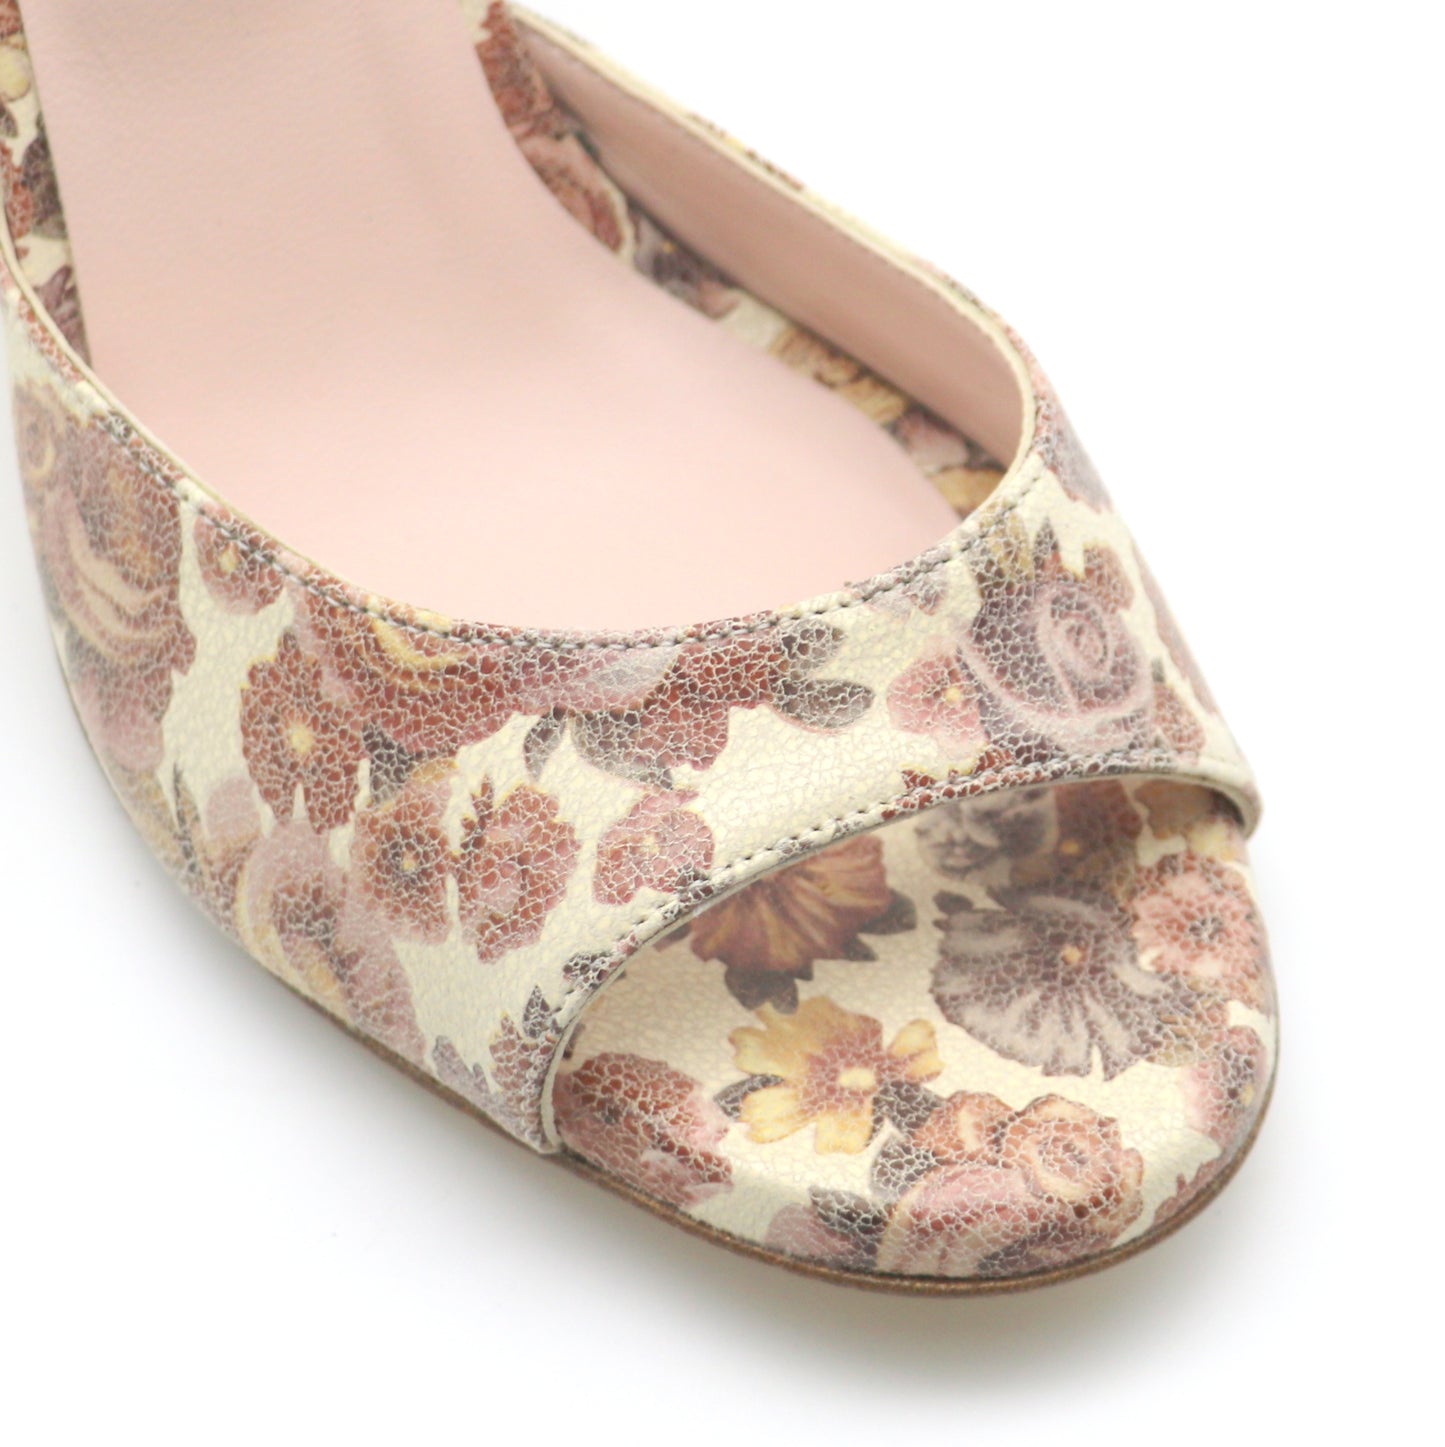 Sentimental Flowers Caramel heels 8cm